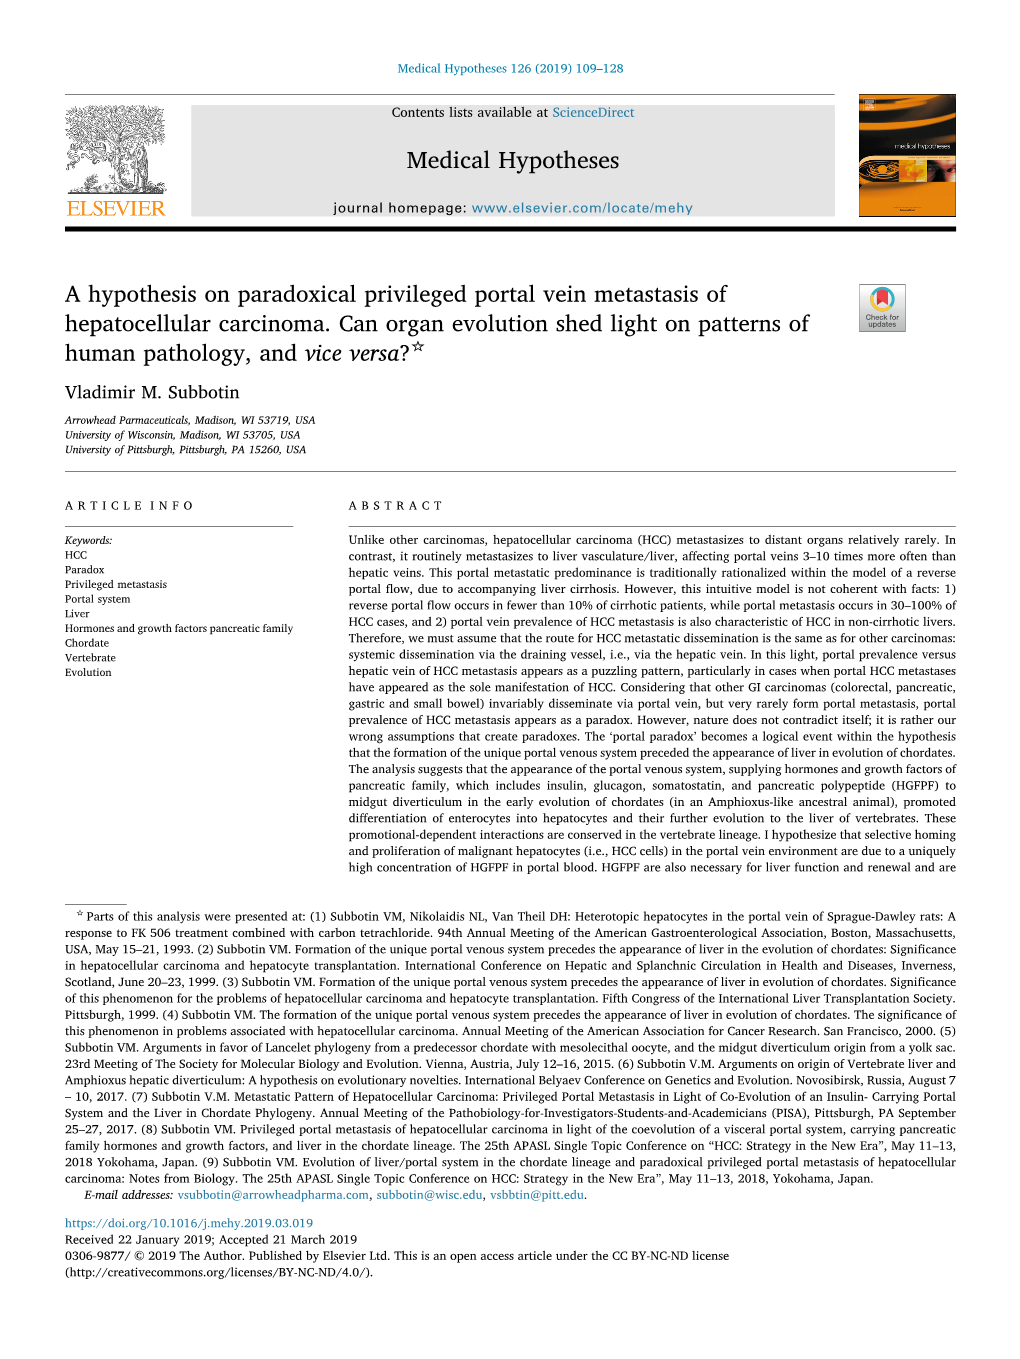 A Hypothesis on Paradoxical Privileged Portal Vein Metastasis of Hepatocellular Carcinoma